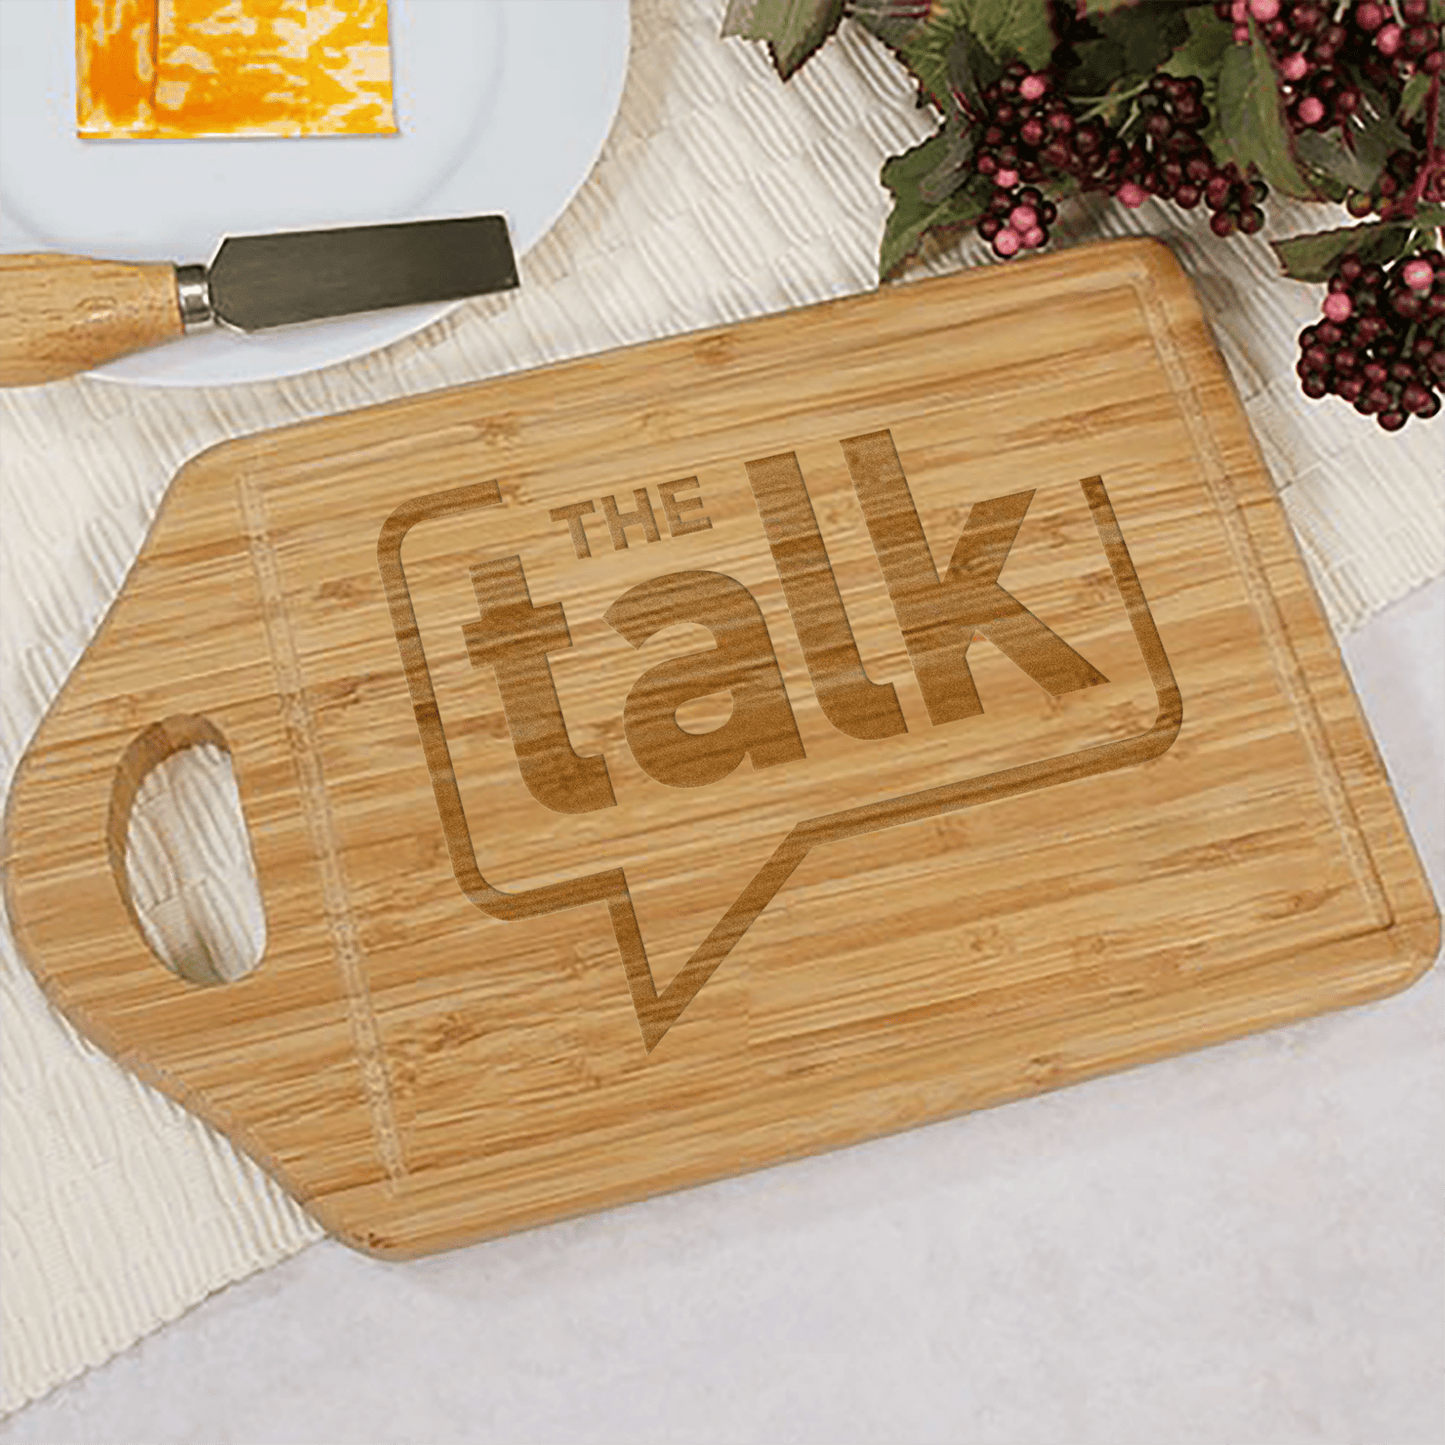 The Talk Logo Laser Engraved Cutting Board - Paramount Shop